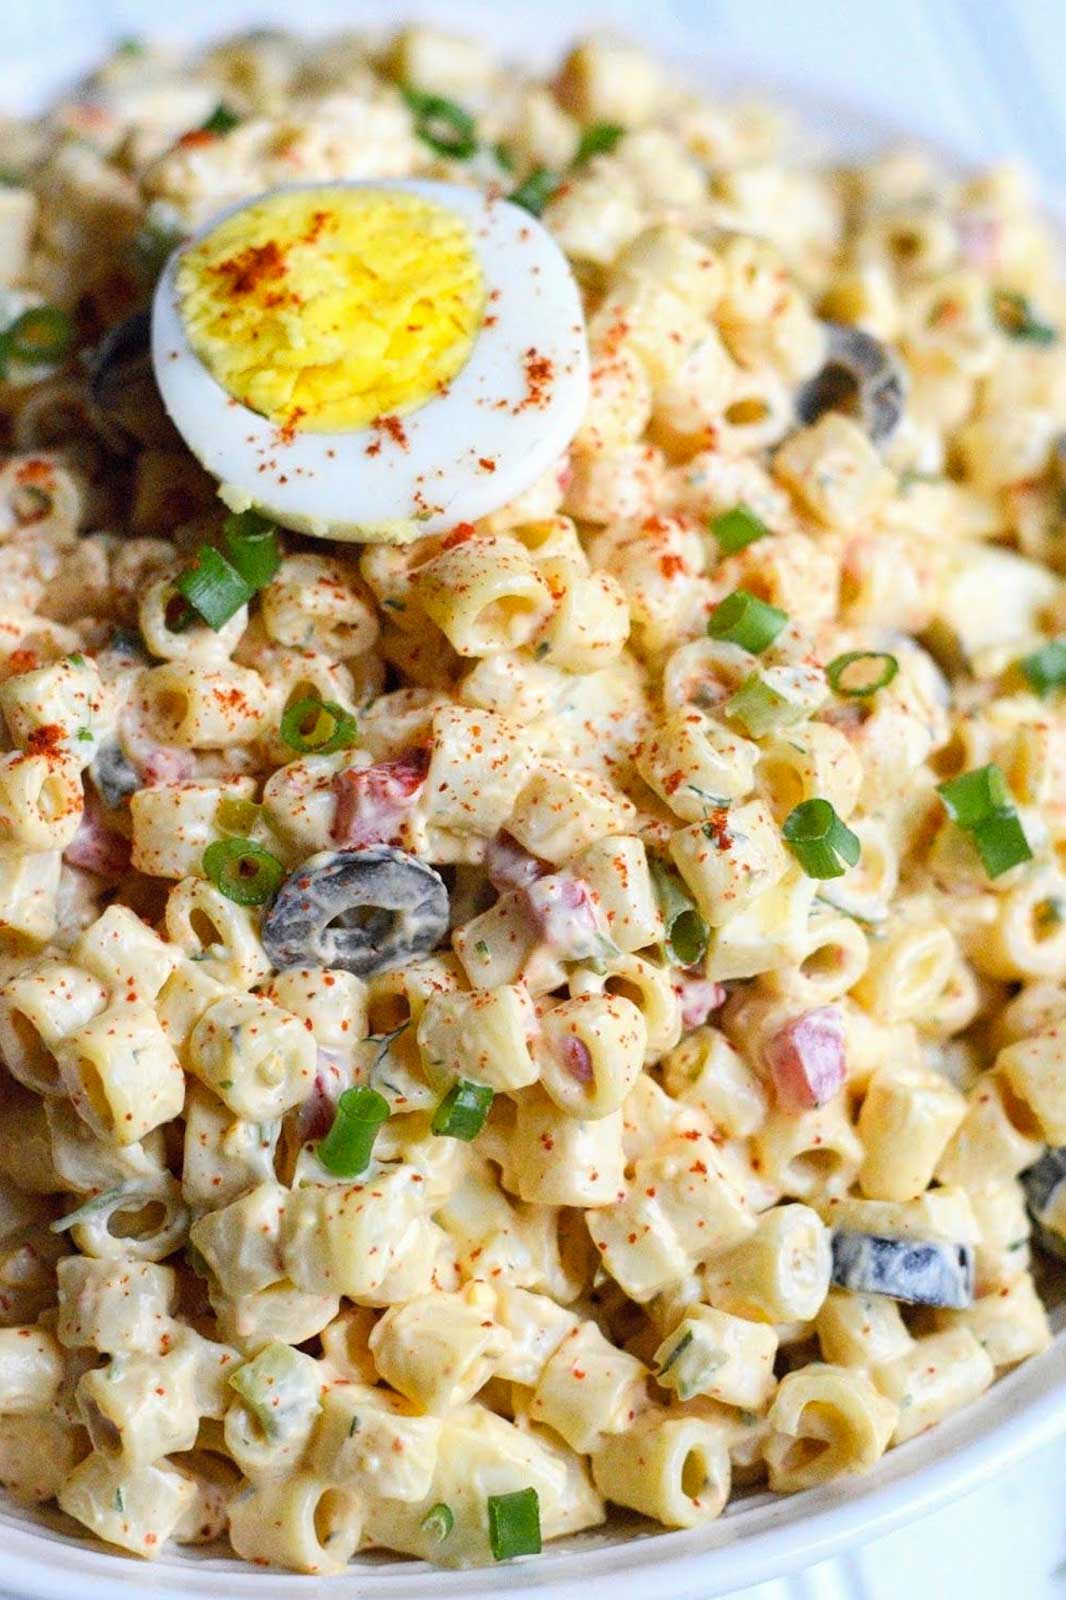 macaroni salad recipe with eggs